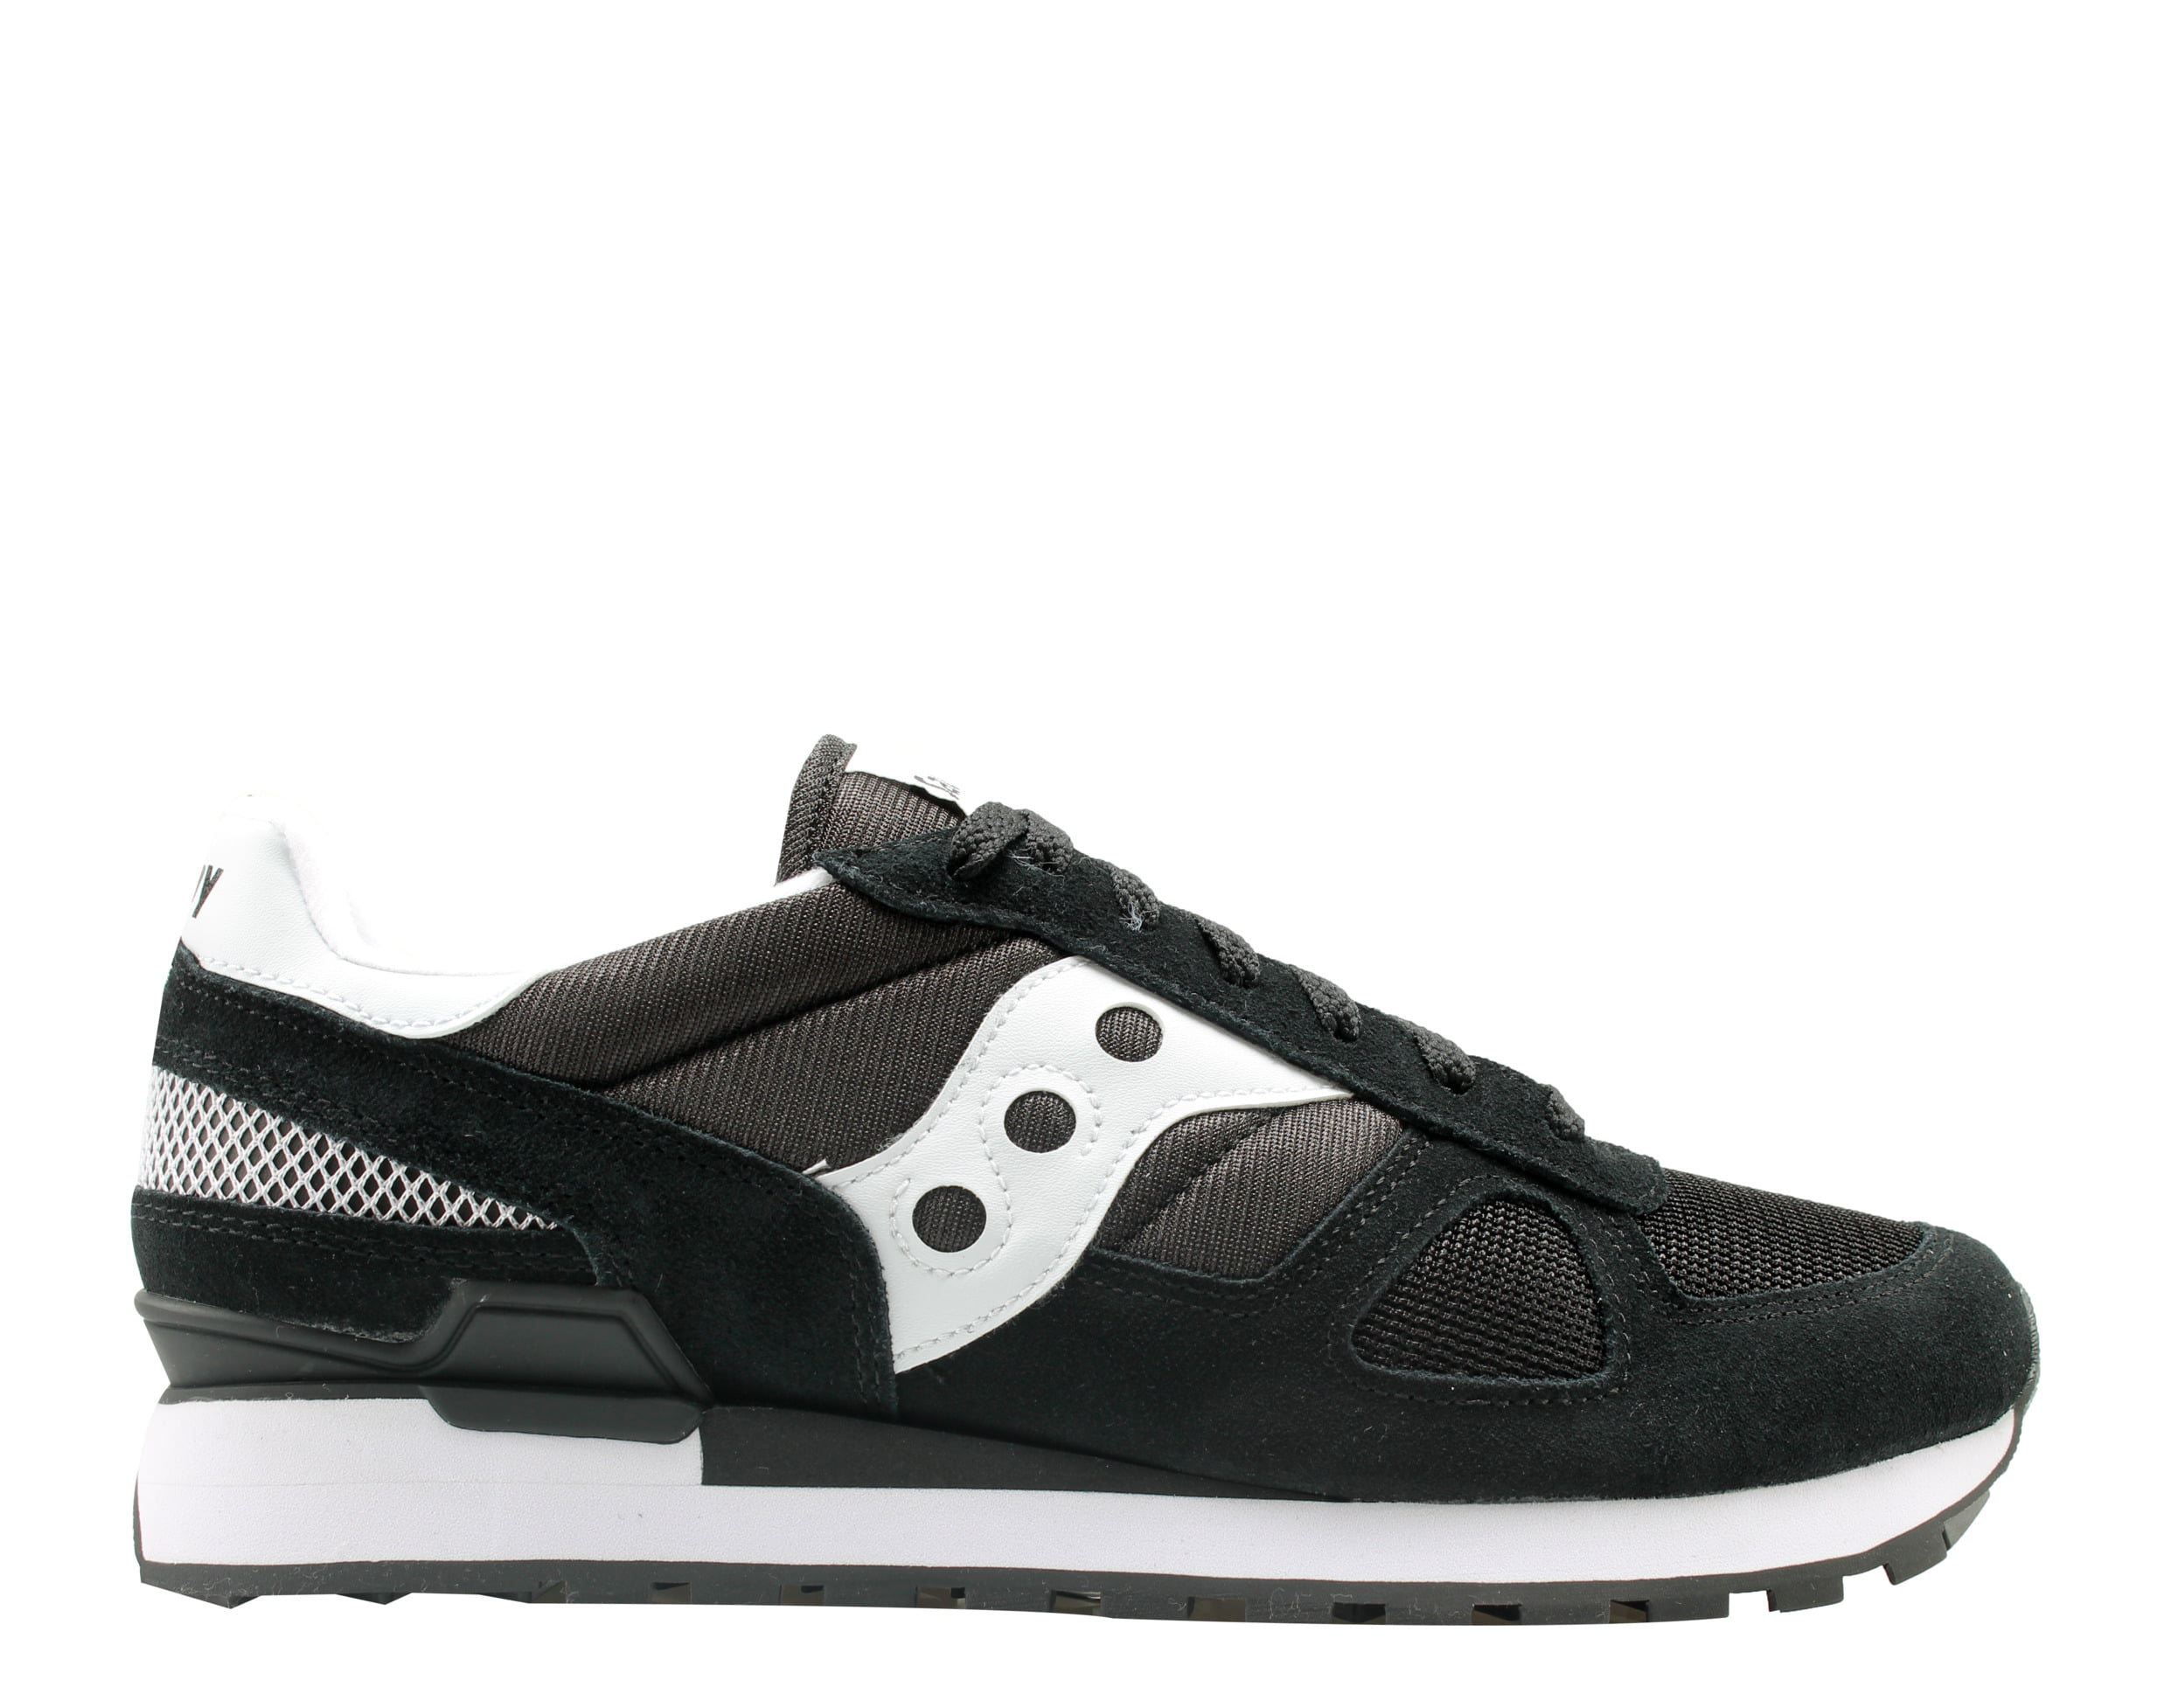 Saucony Shadow Original Black/White Men's Running Shoes 2108-518